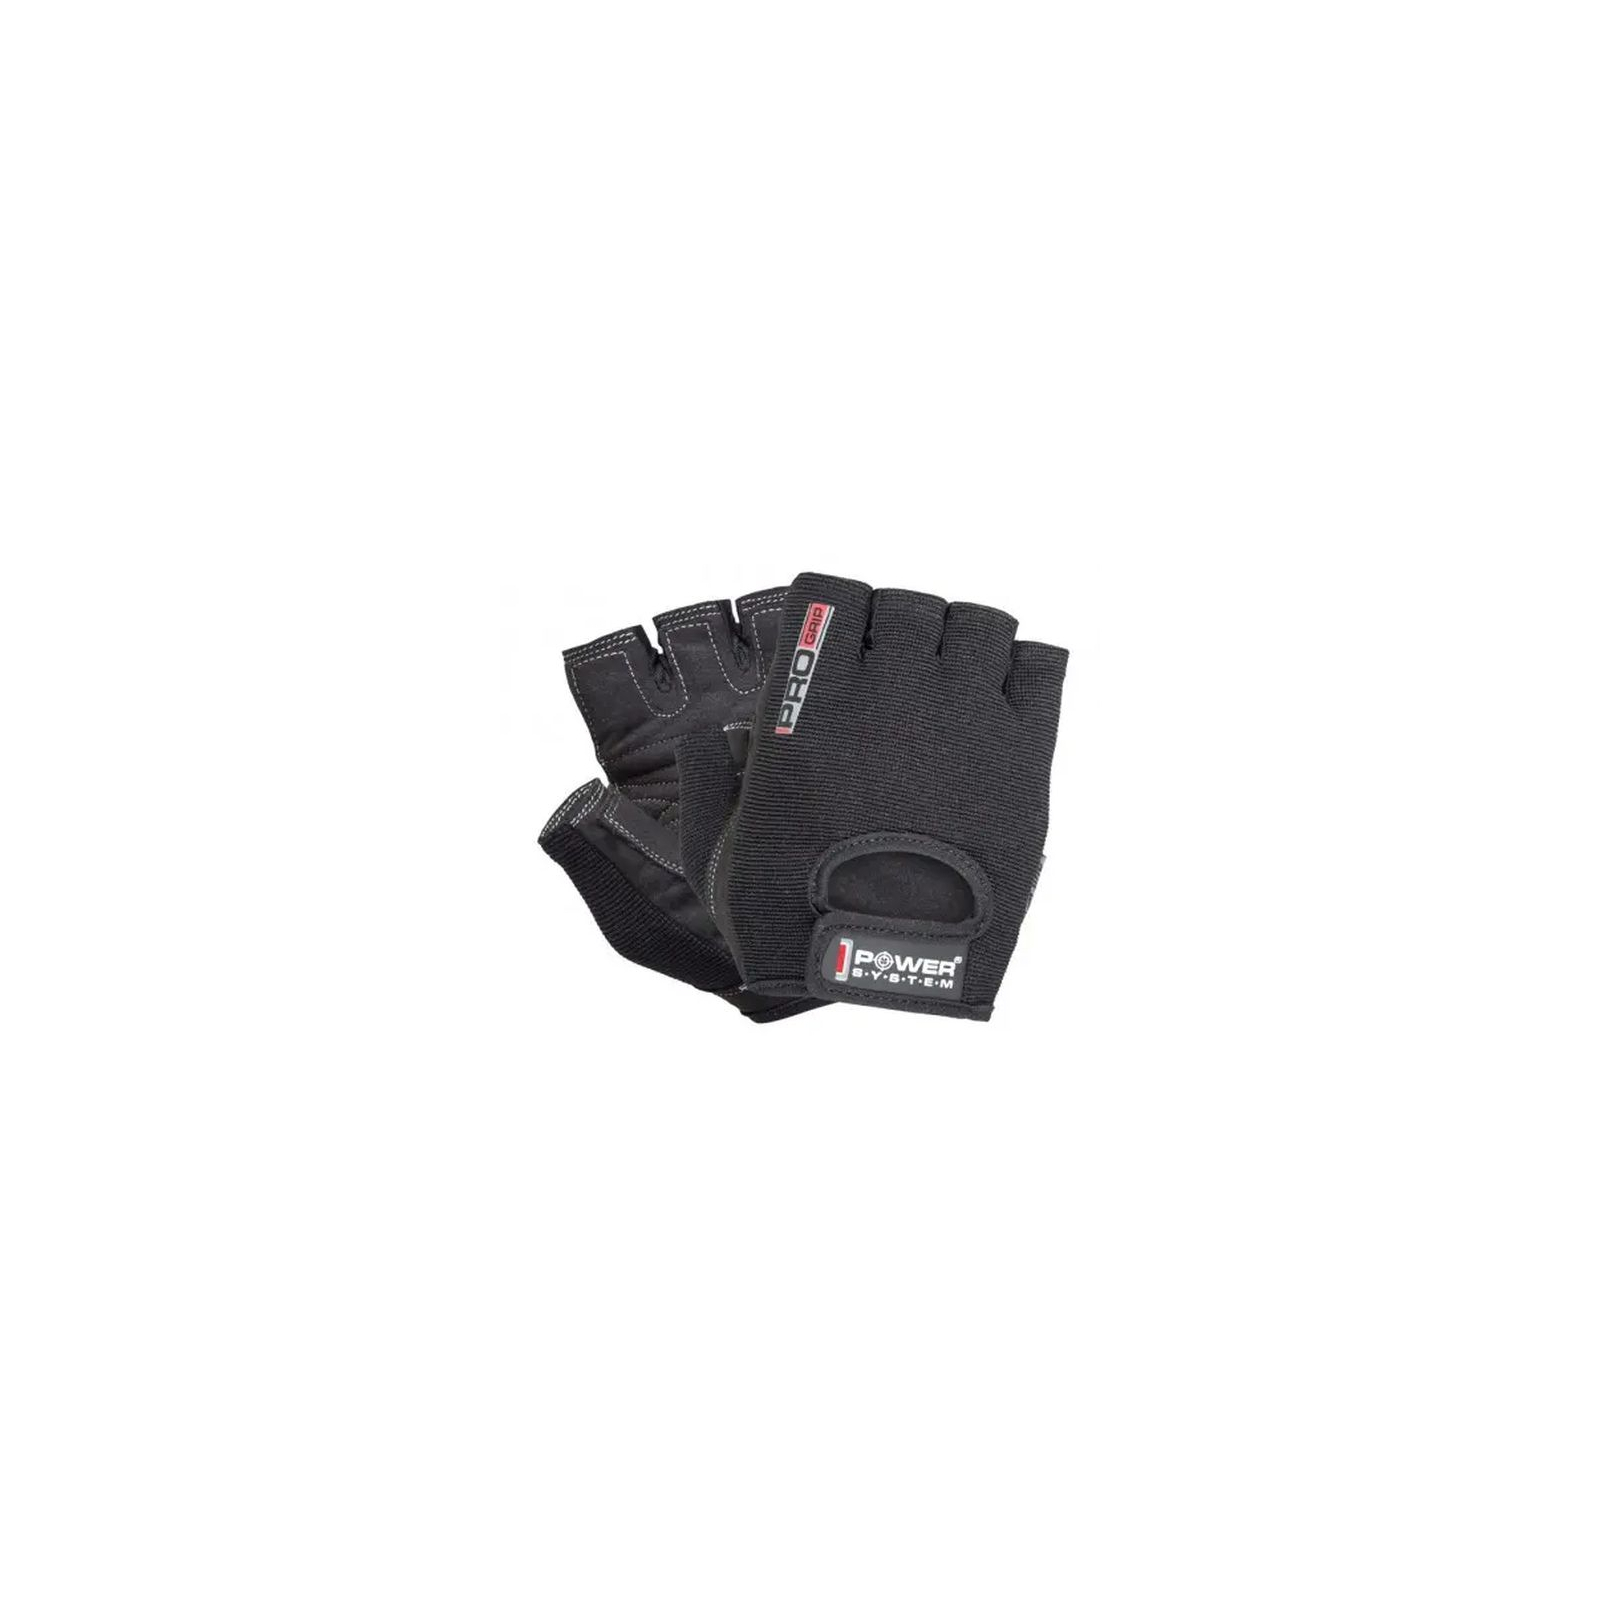 Перчатки для фитнеса Power System Pro Grip PS-2250 L Red (PS-2250_L_Red)